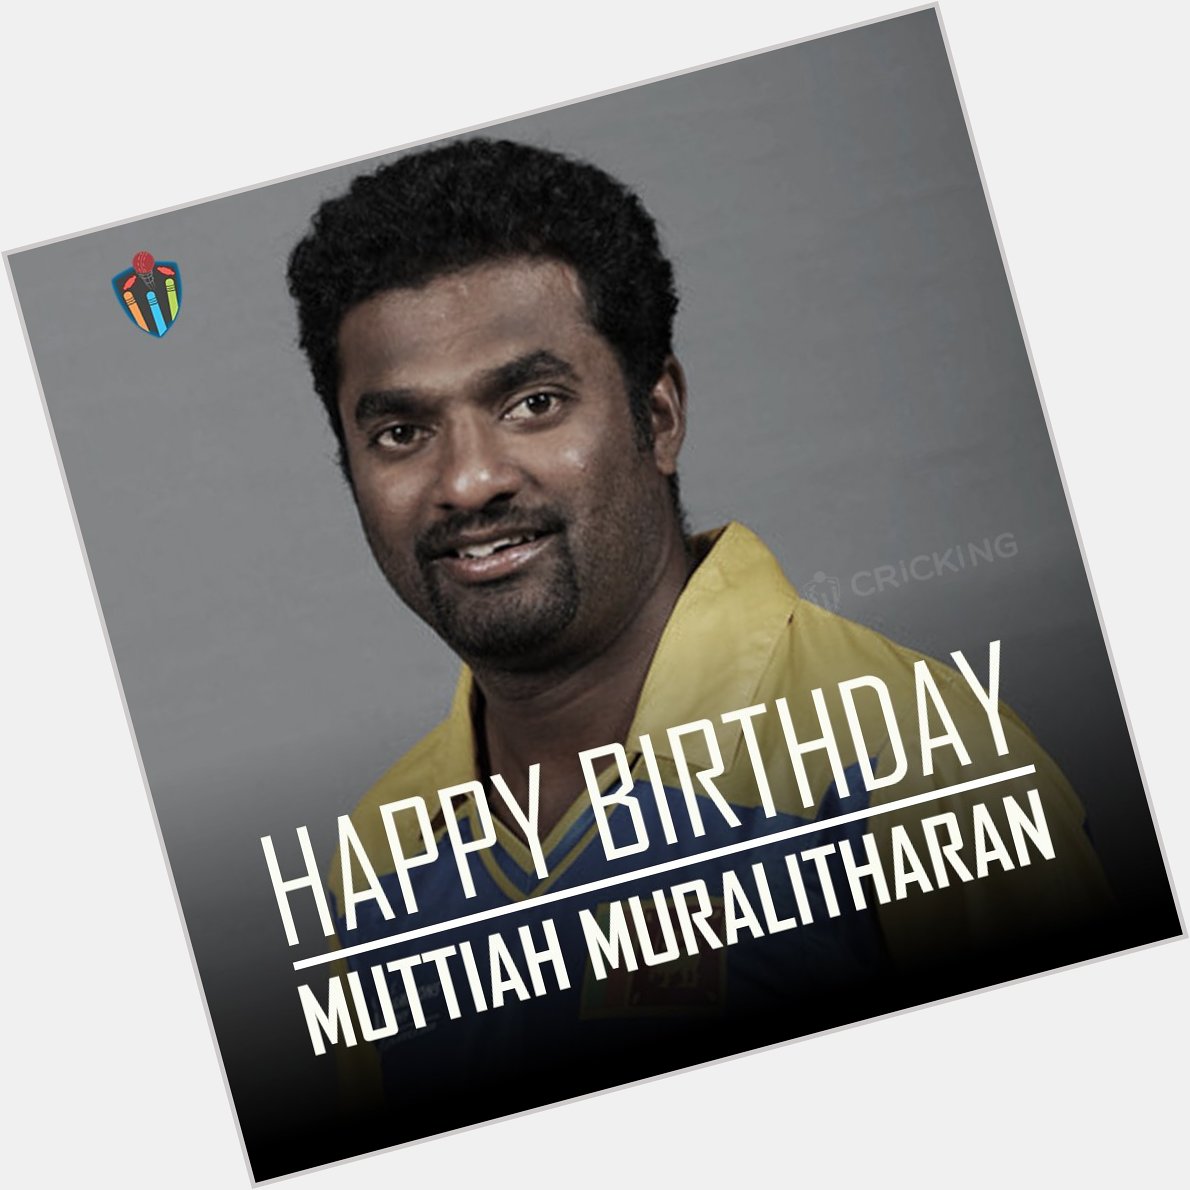 Happy Birthday Muttiah Muralitharan. The former Sri Lankan cricketer turns 45 today. 